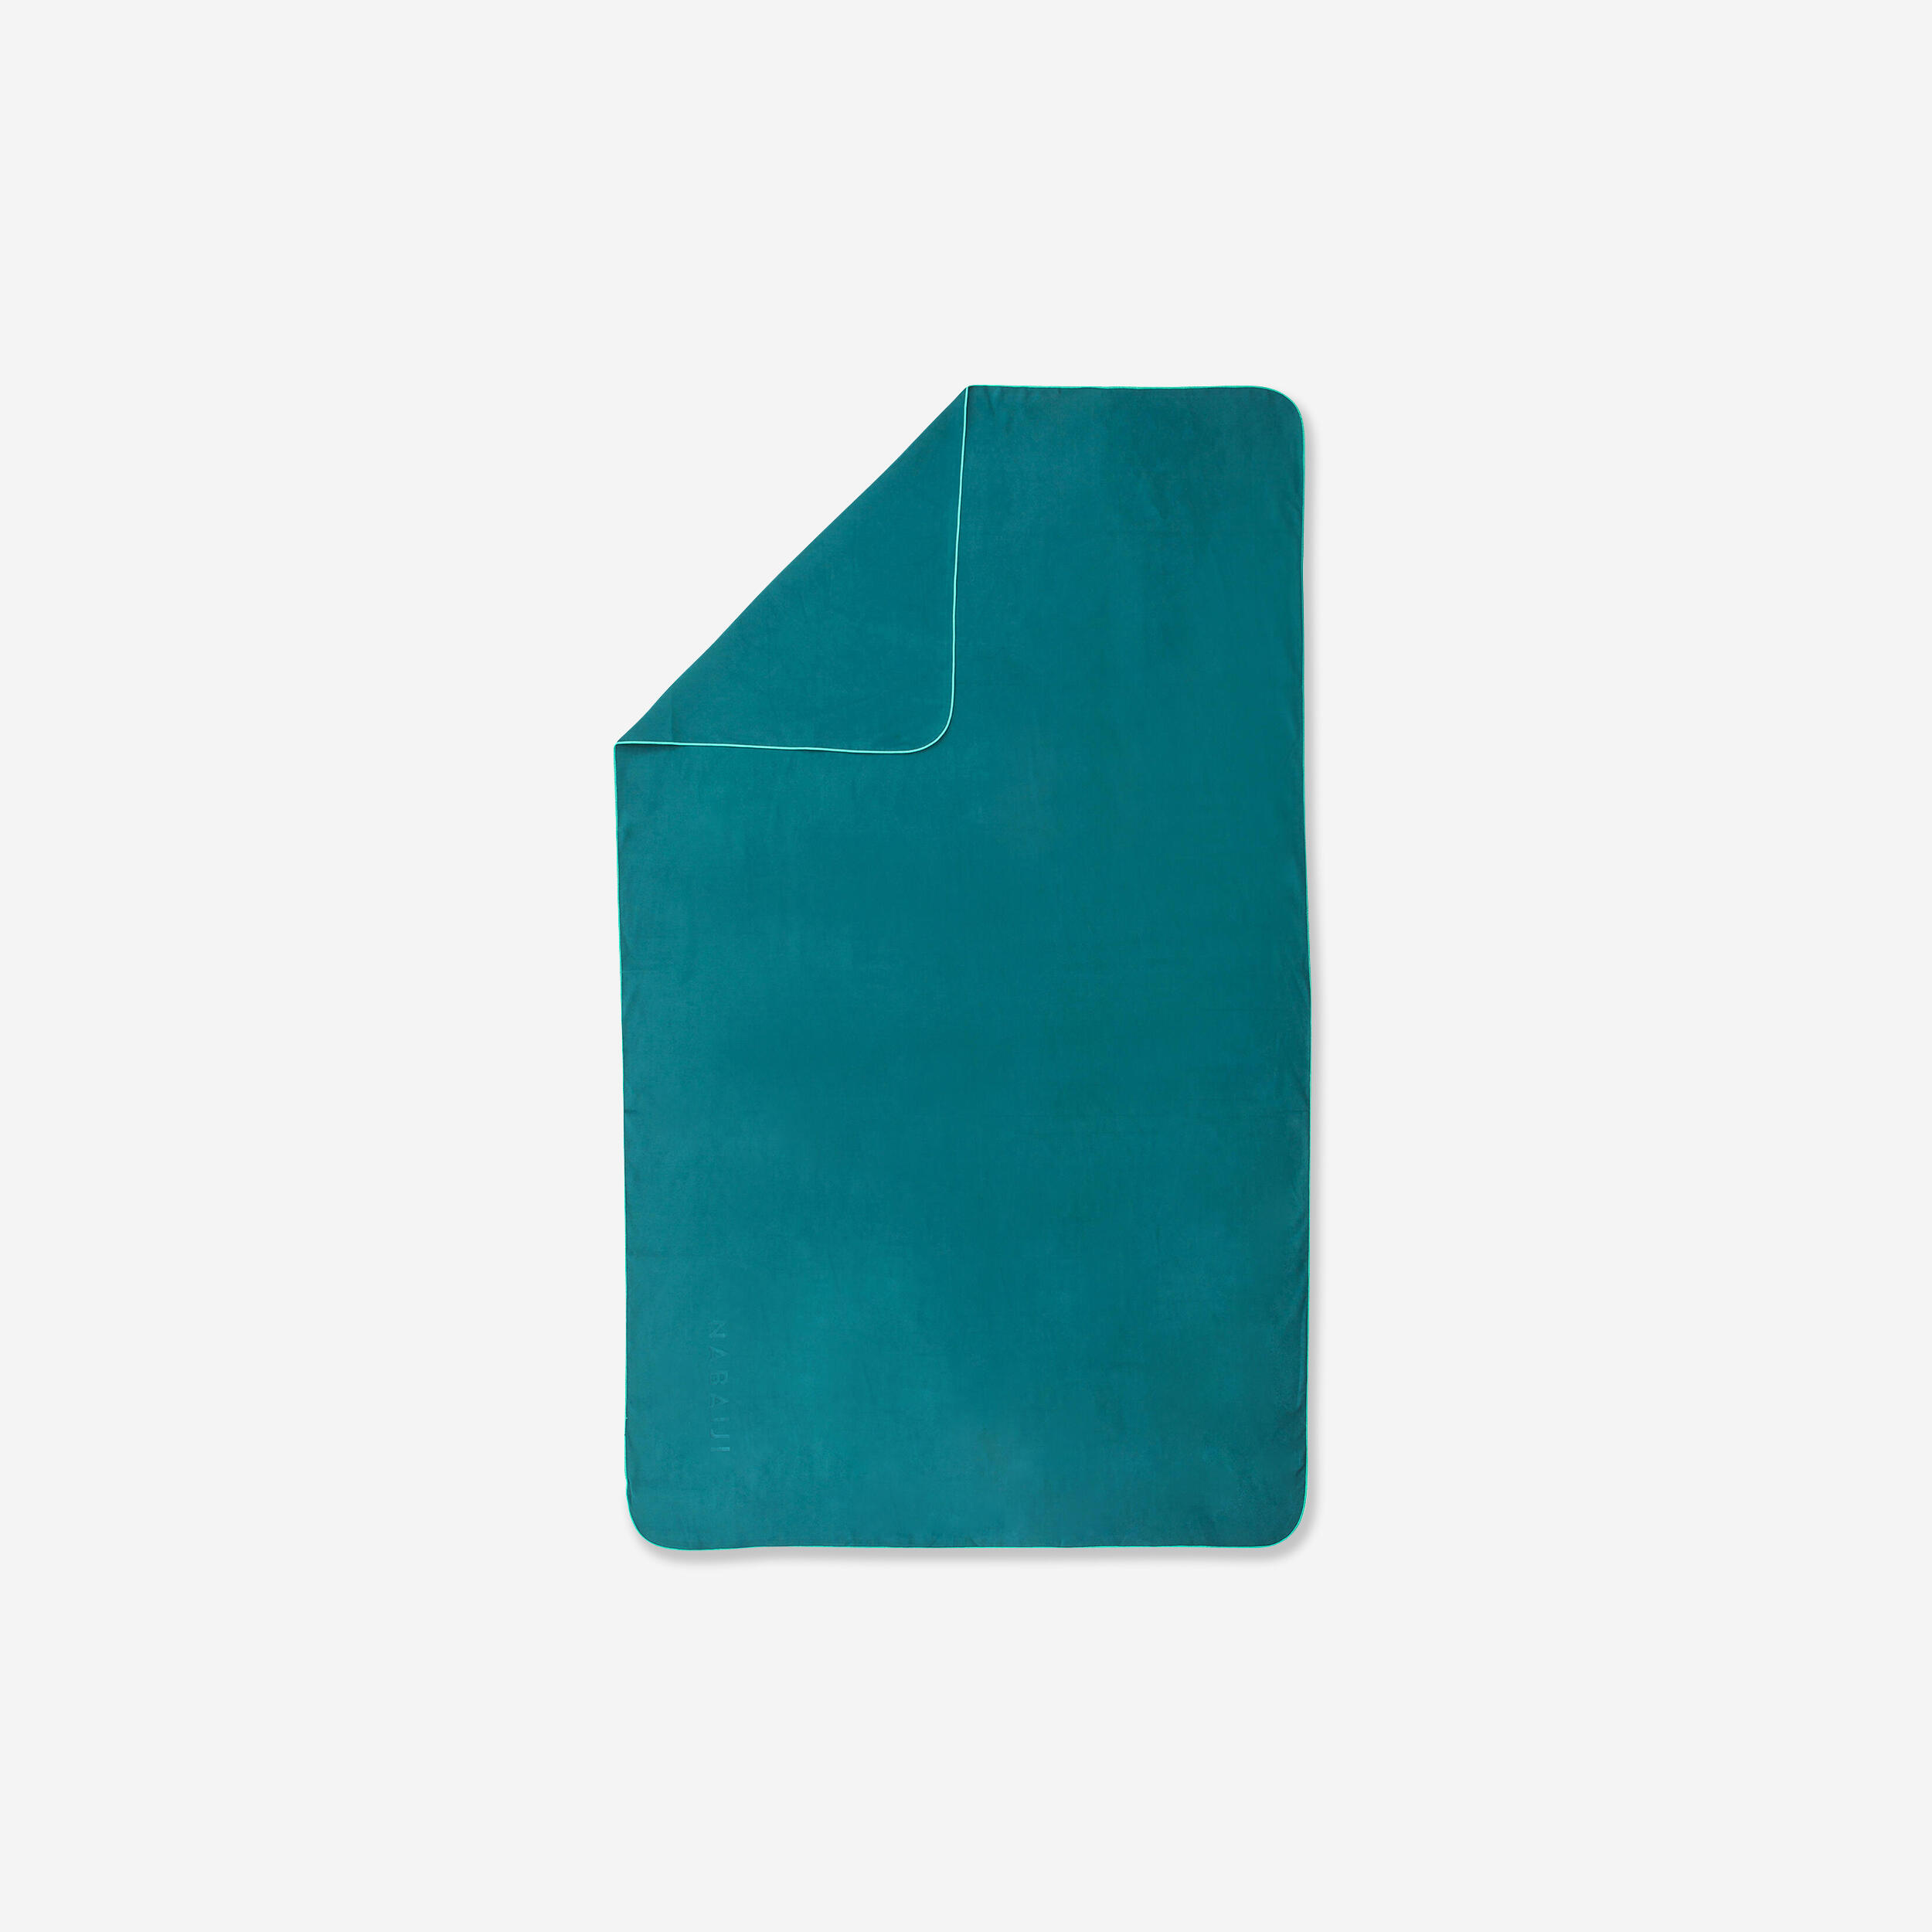 Swimming Microfibre Towel Size L 80 x 130 cm - Green 1/4